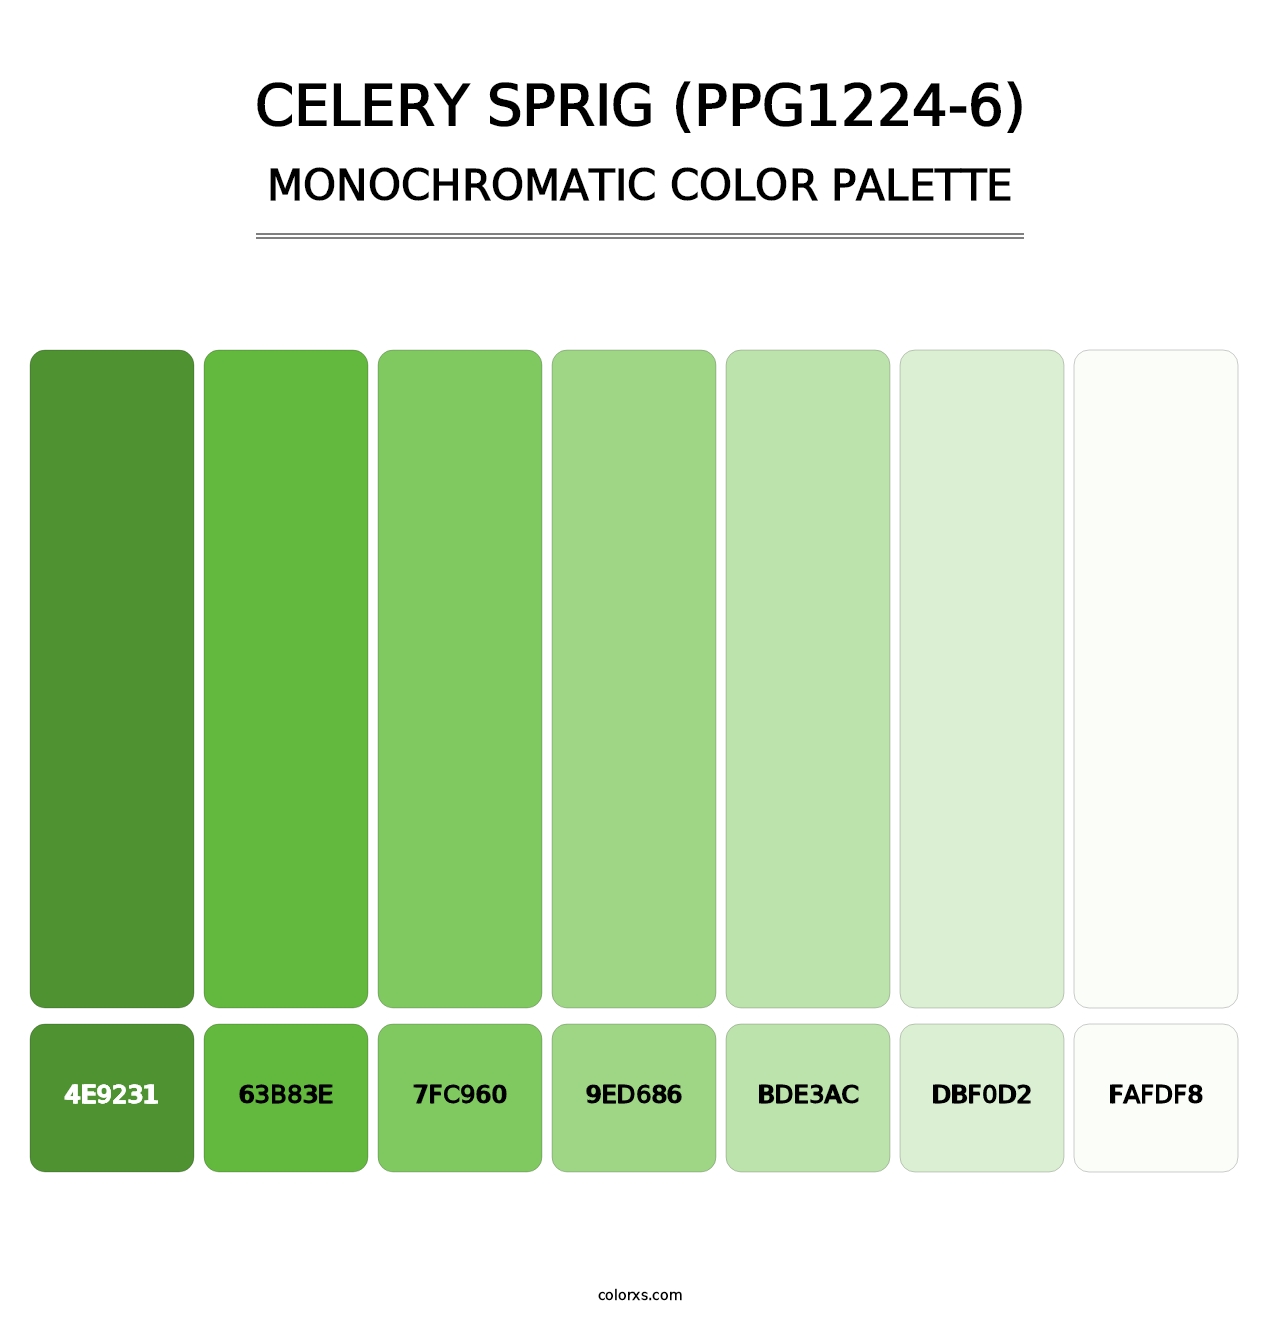 Celery Sprig (PPG1224-6) - Monochromatic Color Palette